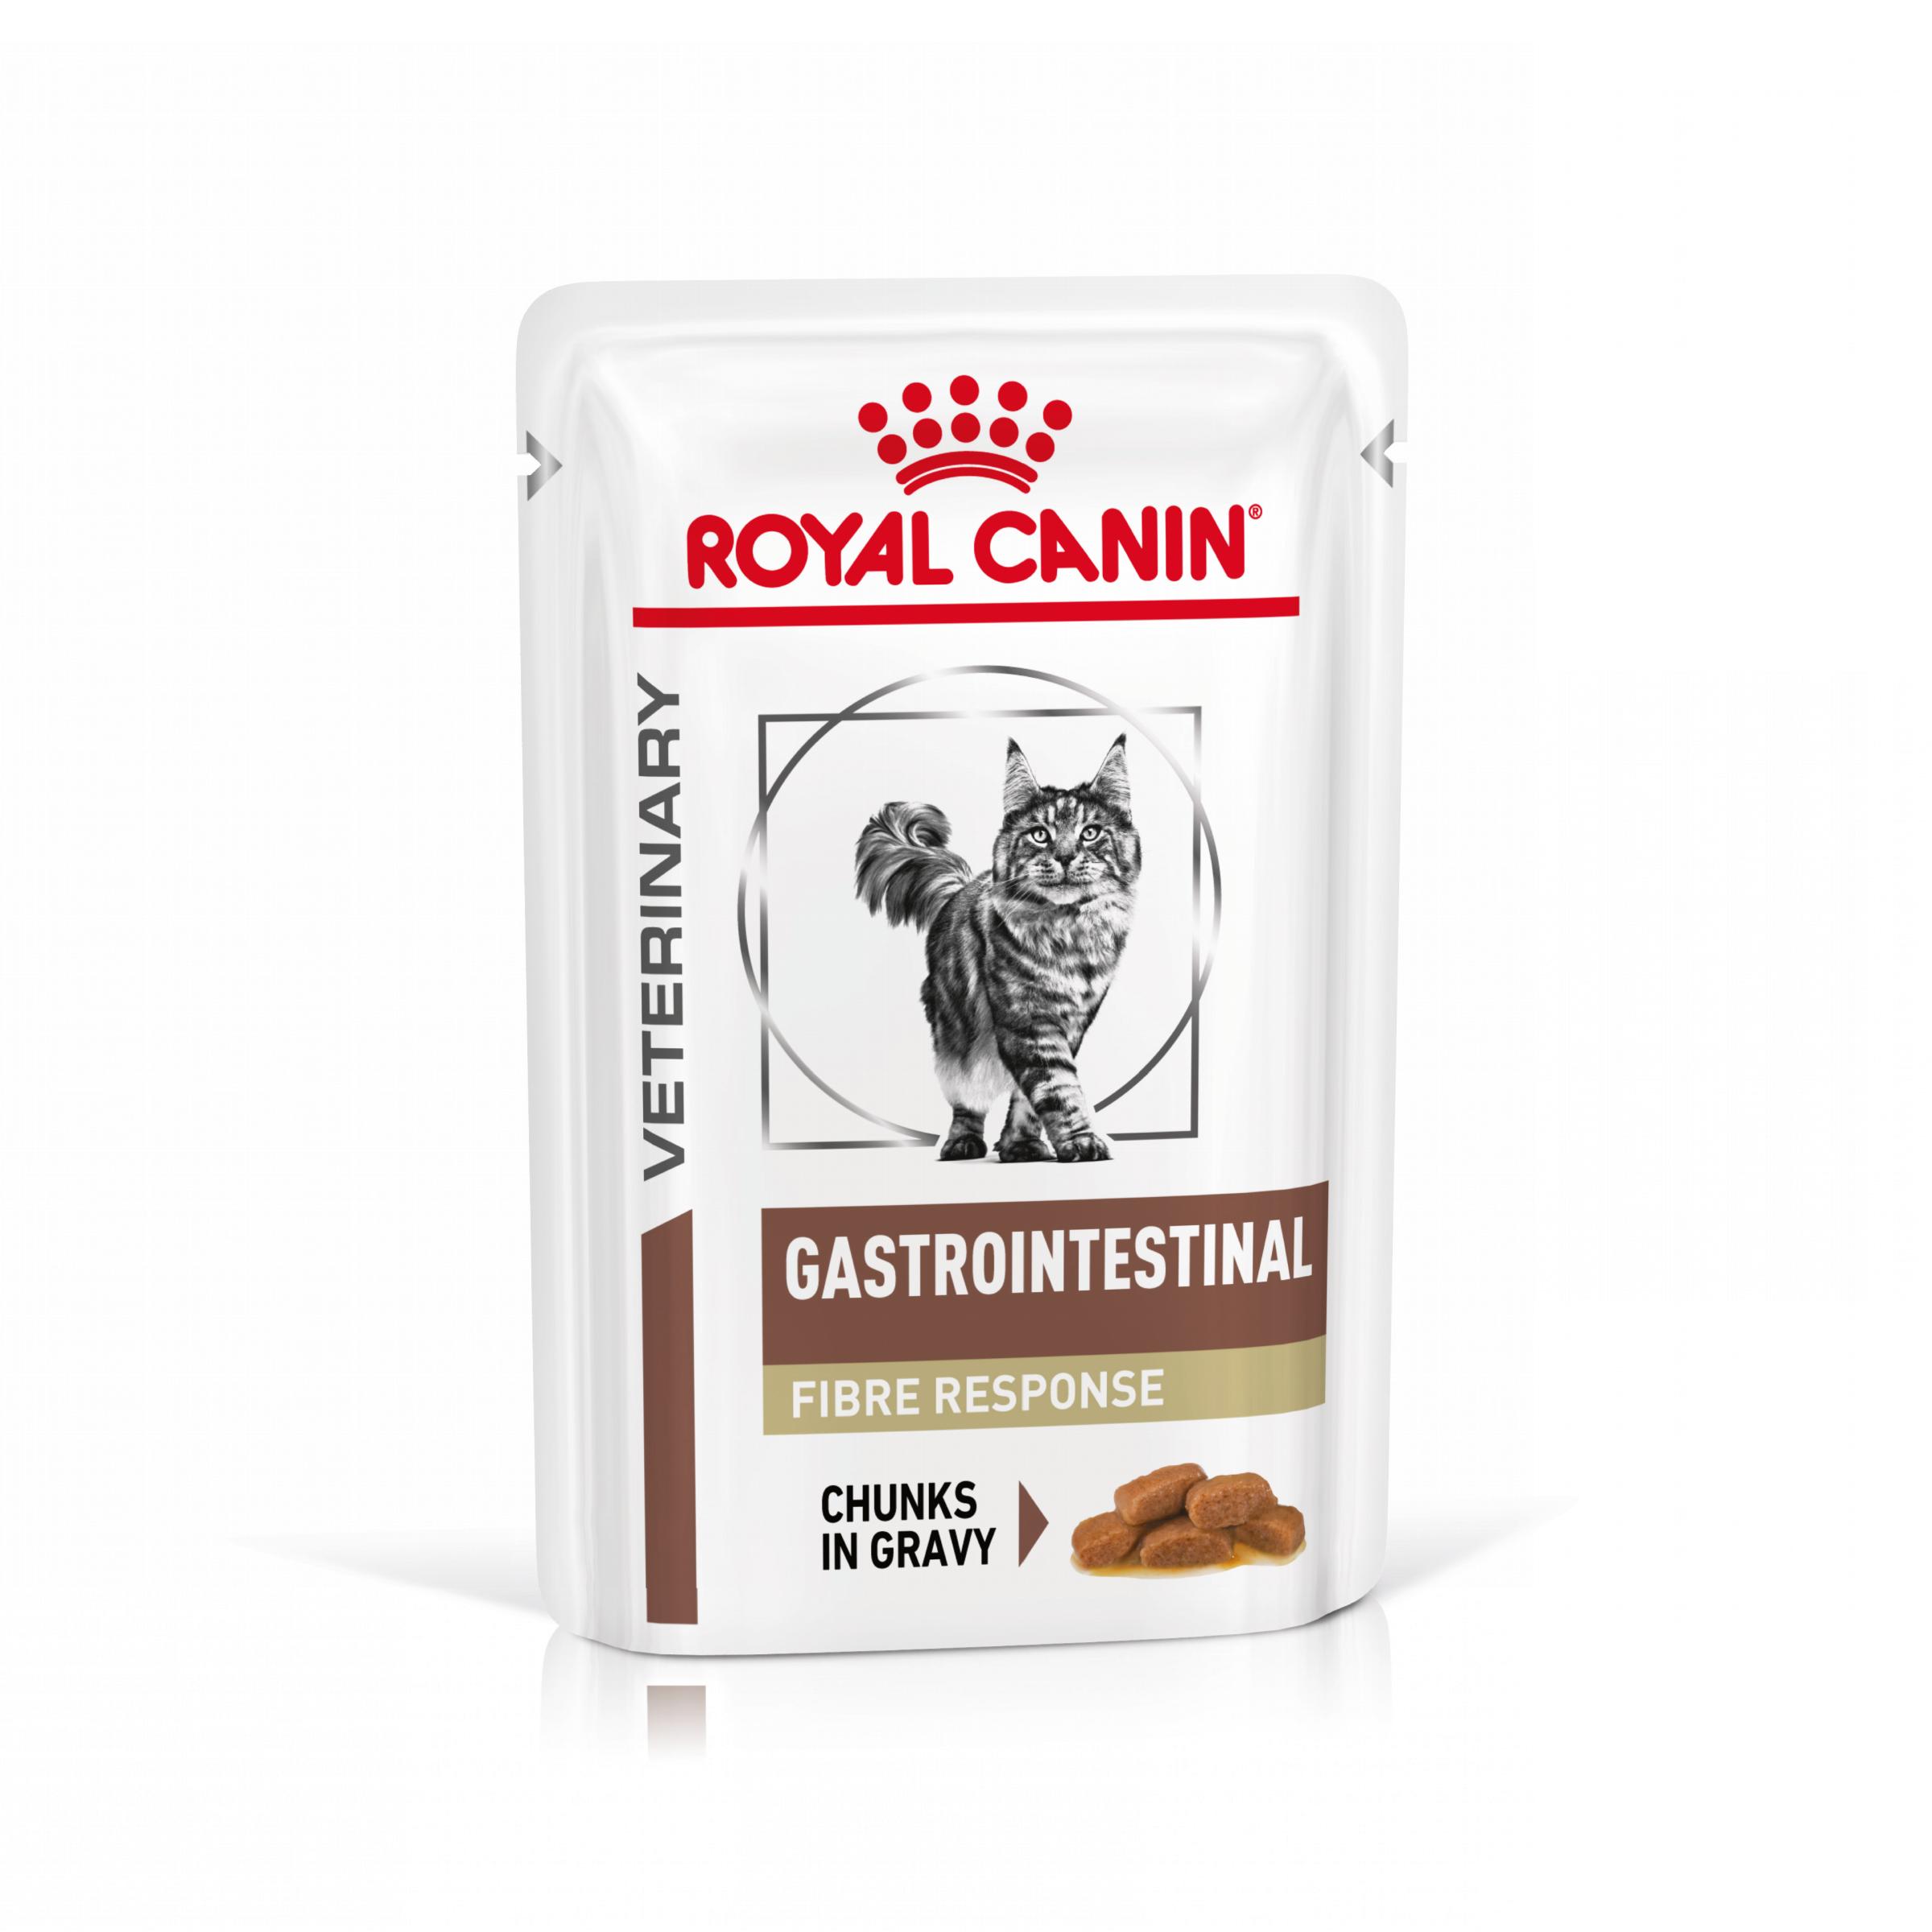 Royal Canin Gastrointestinal Fibre Response Kat - pouches